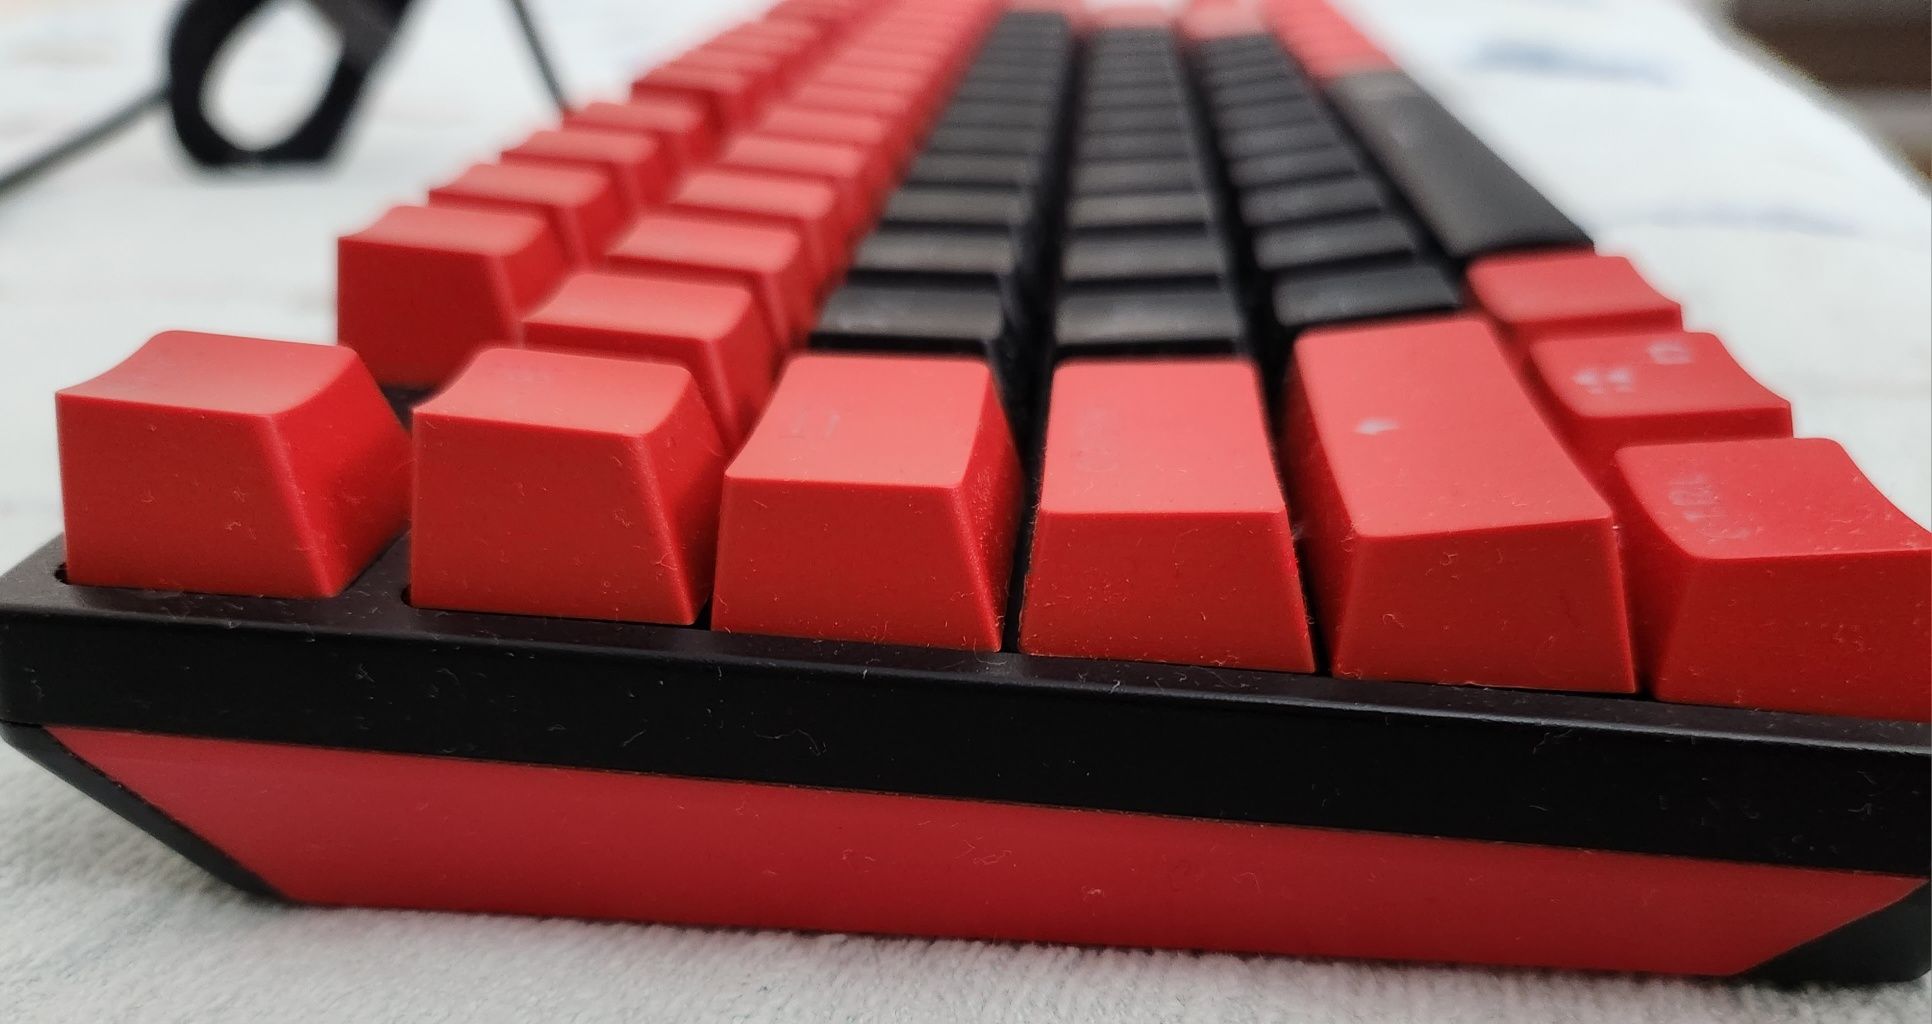 продам механическую клавиатуру Hexgears GK707 hot swap (Kalith Red)